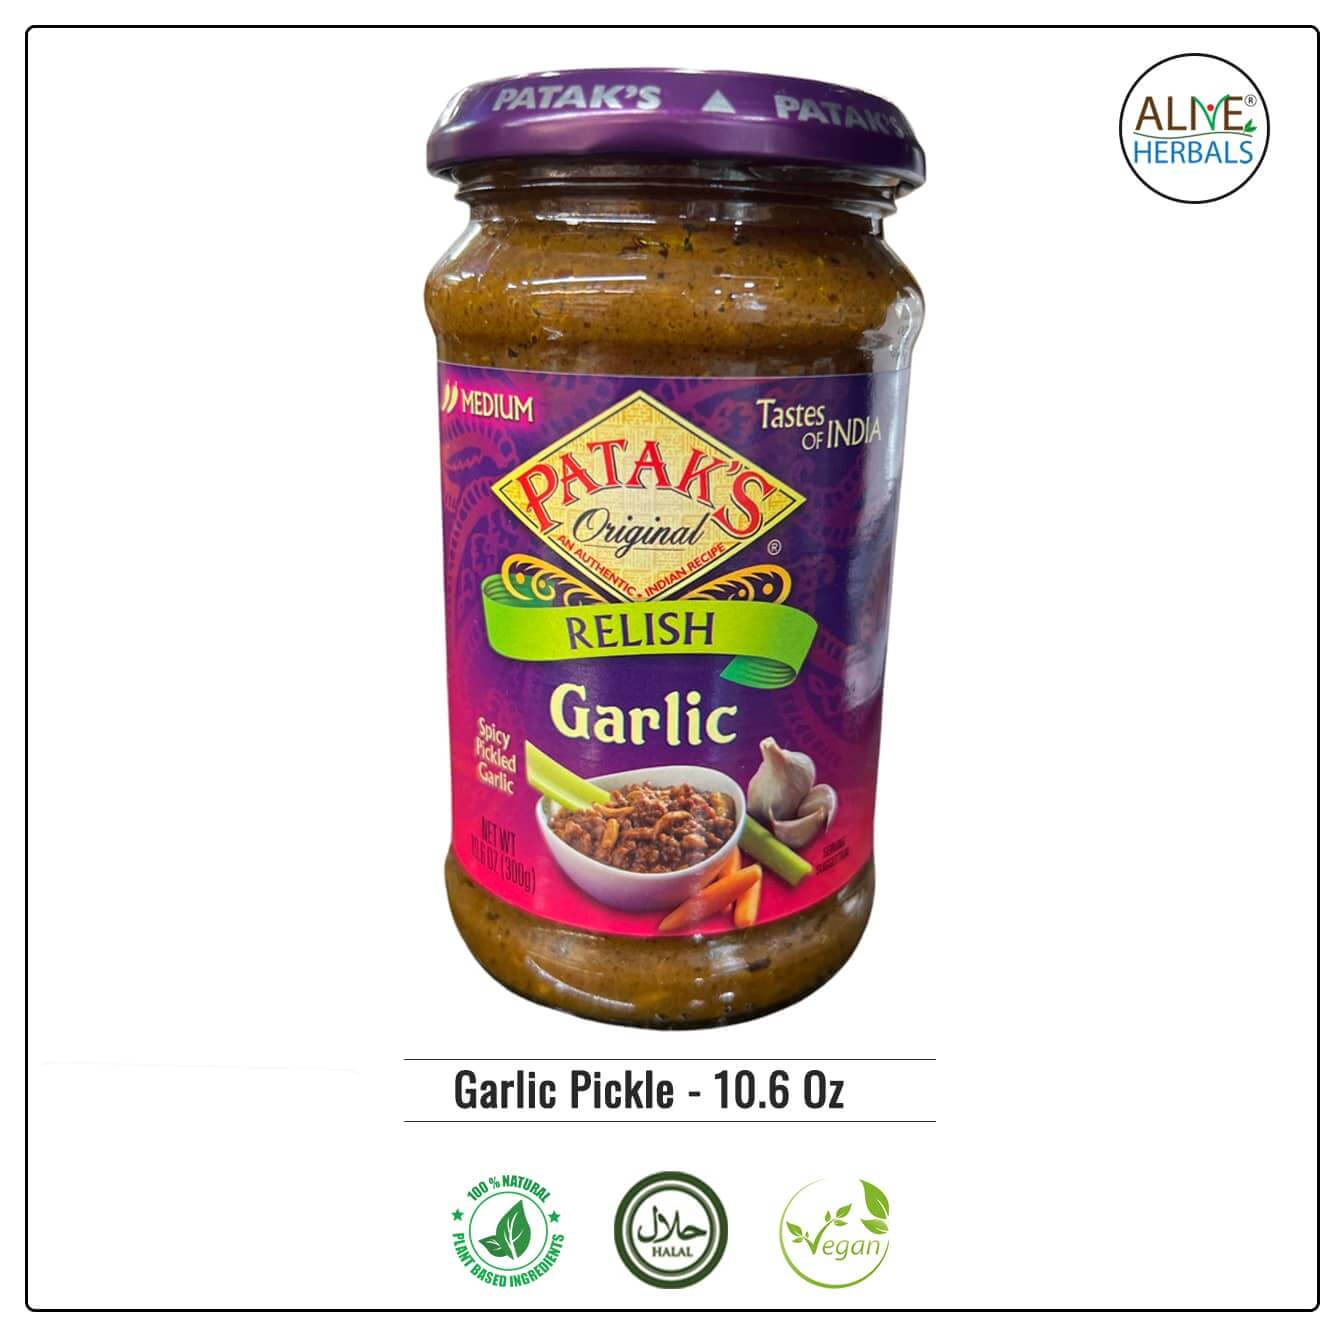 Garlic Pickle - Alive Herbals